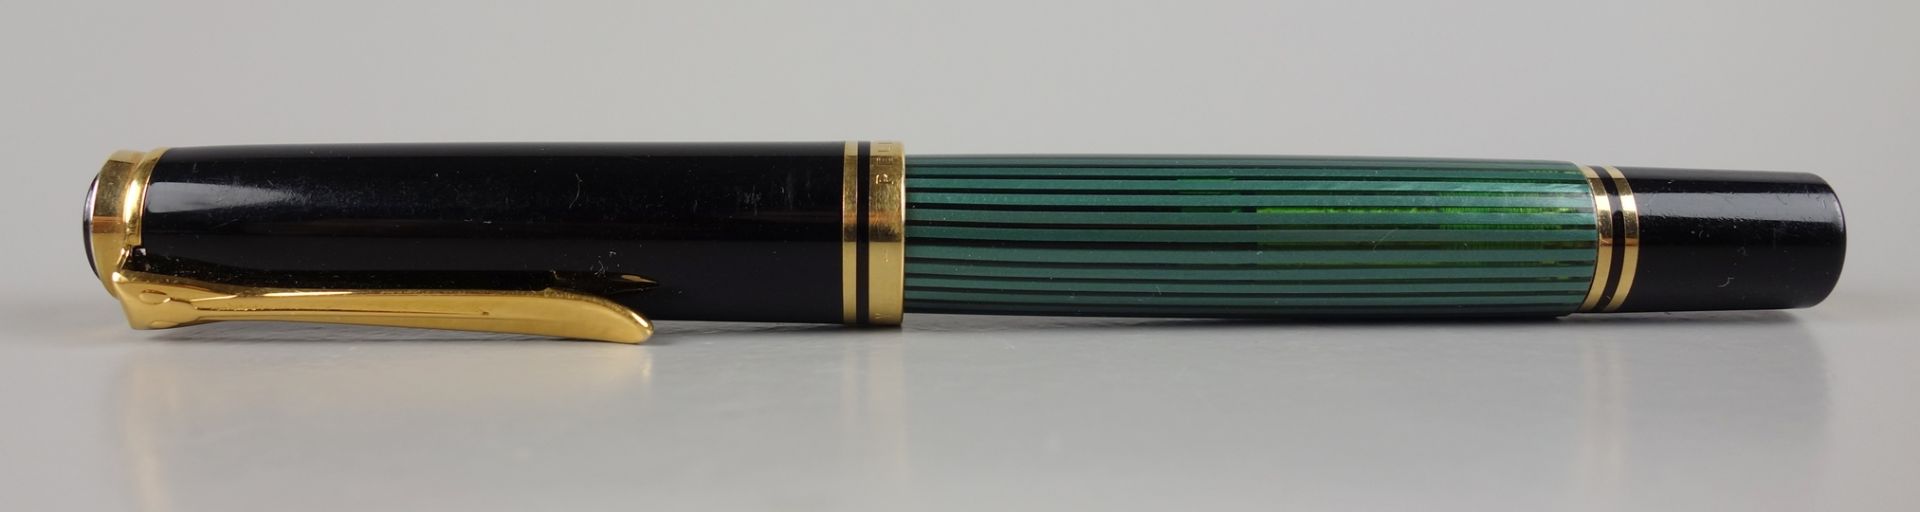 Pelikan Souverän piston fountain pen, M800 - Image 2 of 3